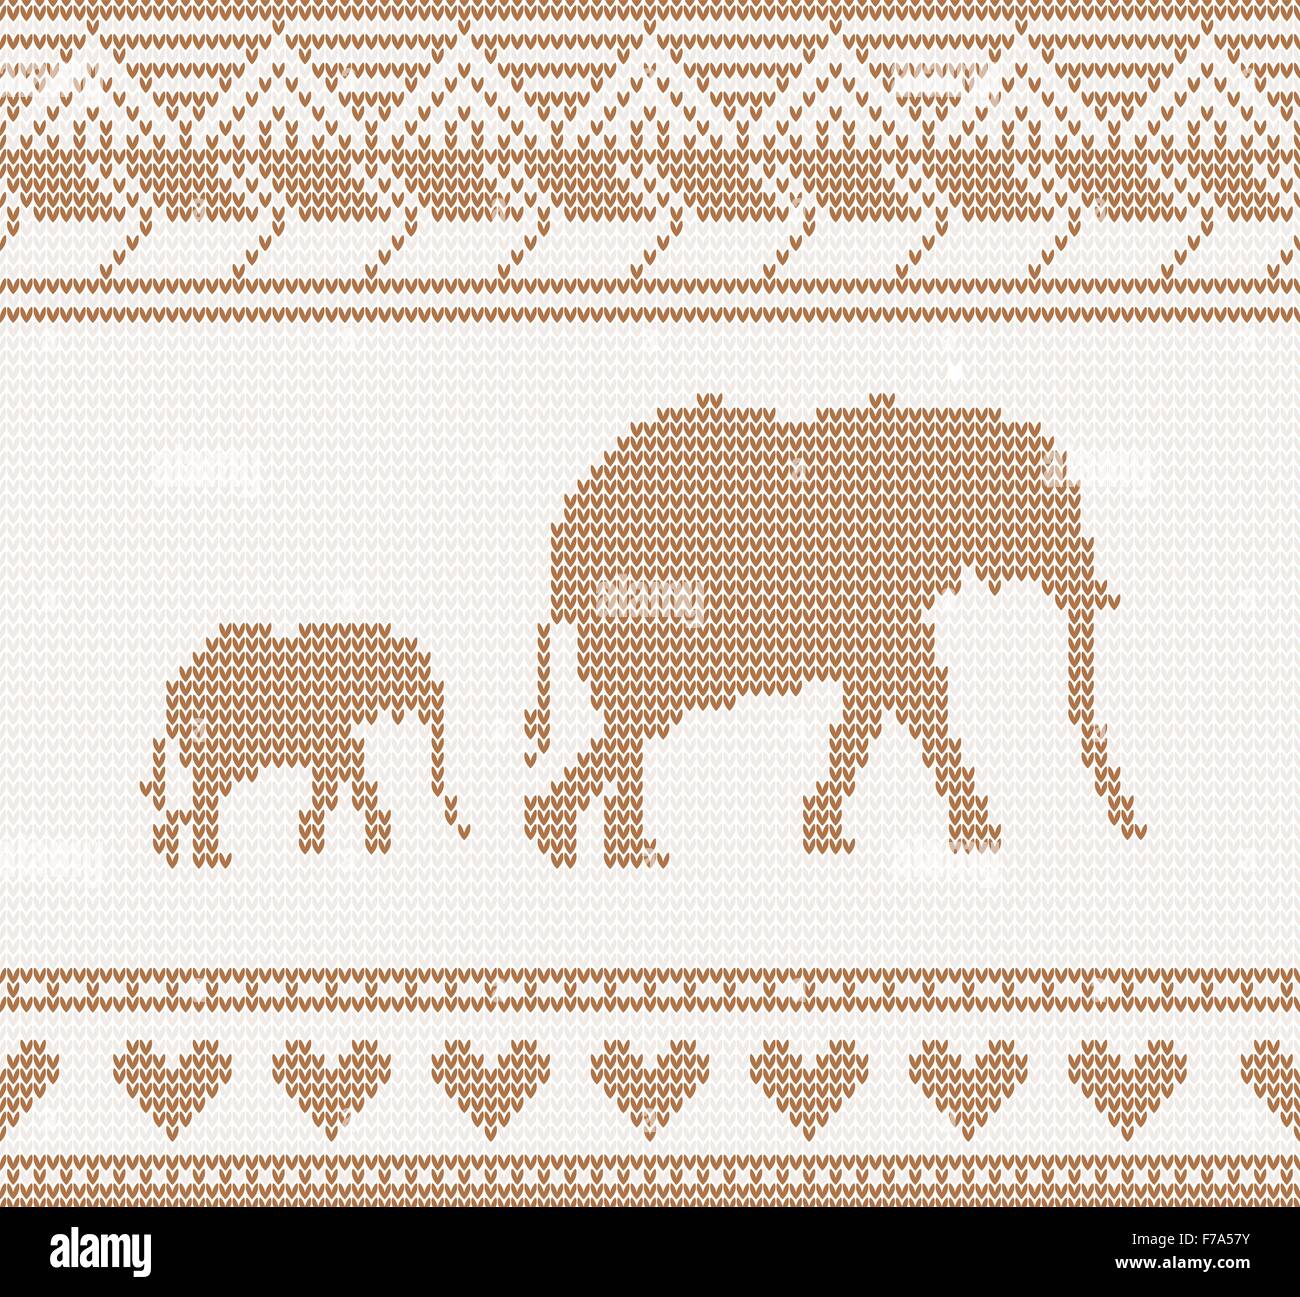 Strickmuster mit Elefanten nahtloser Vektor-illustration Stock Vektor